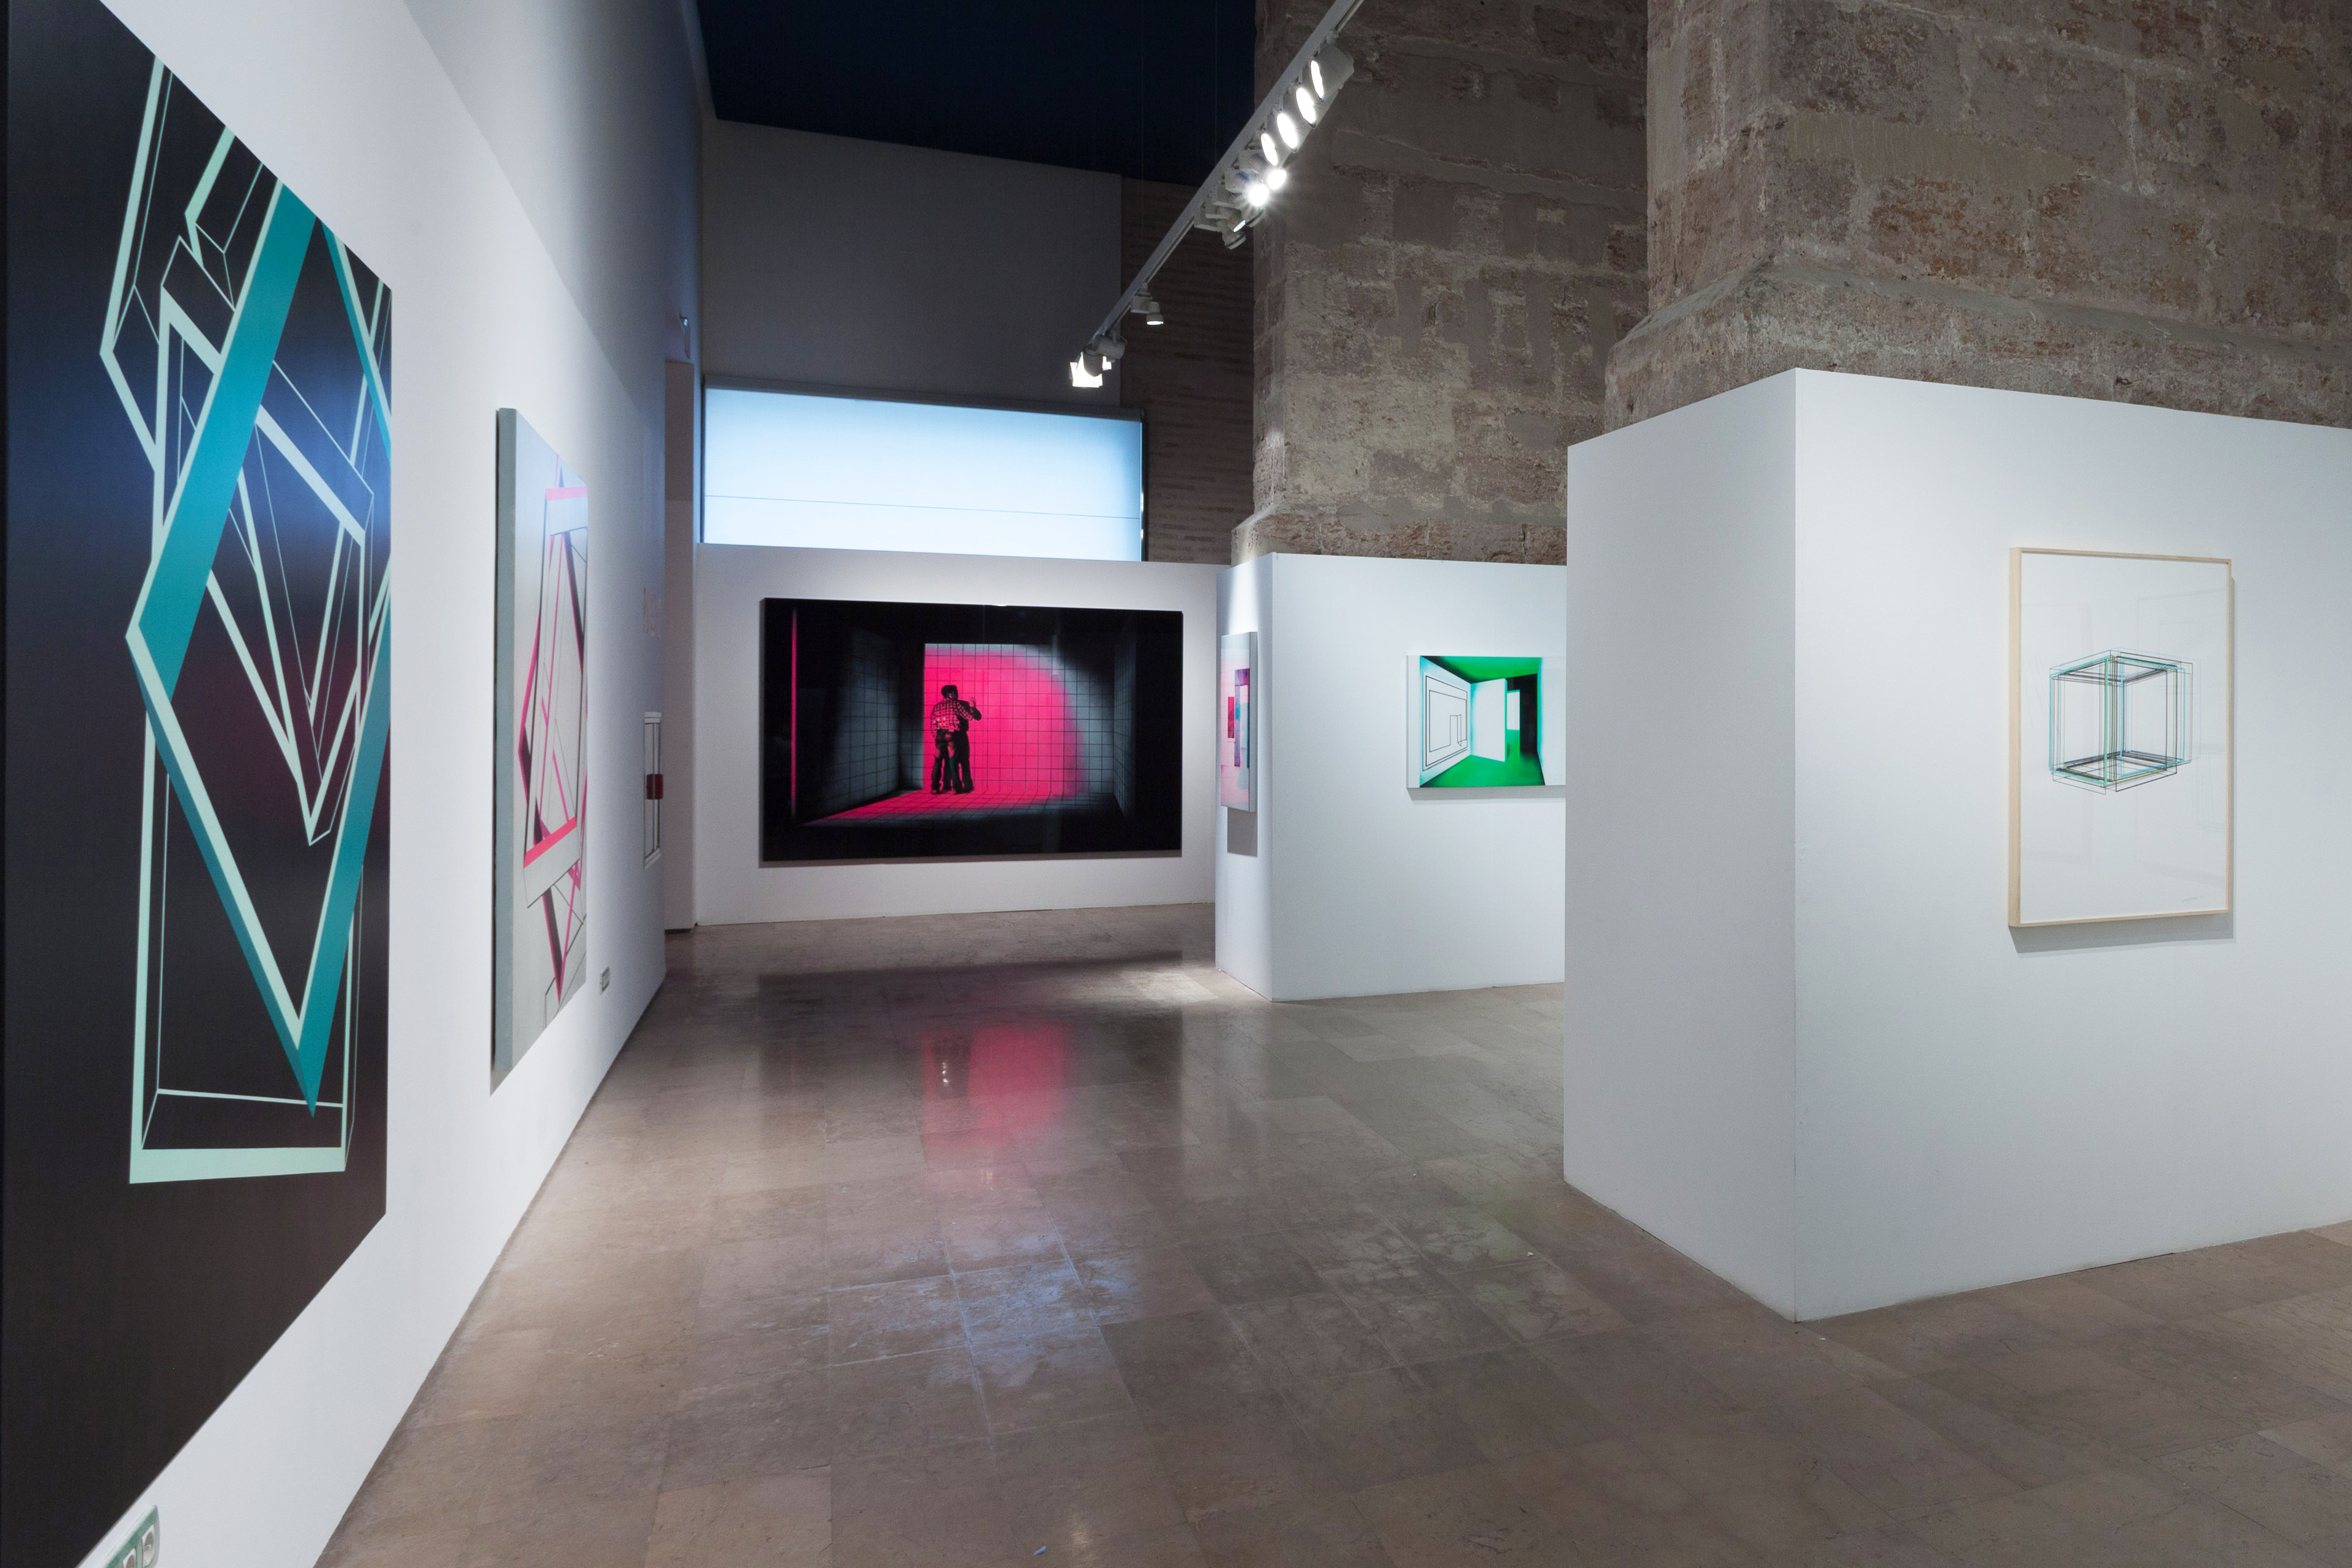 Ángulos del vacío. Carolina Ferrer & Encarna Sepúlveda. Museo Centre del Carme Cultura Contemporània. Valencia, 2016-2017